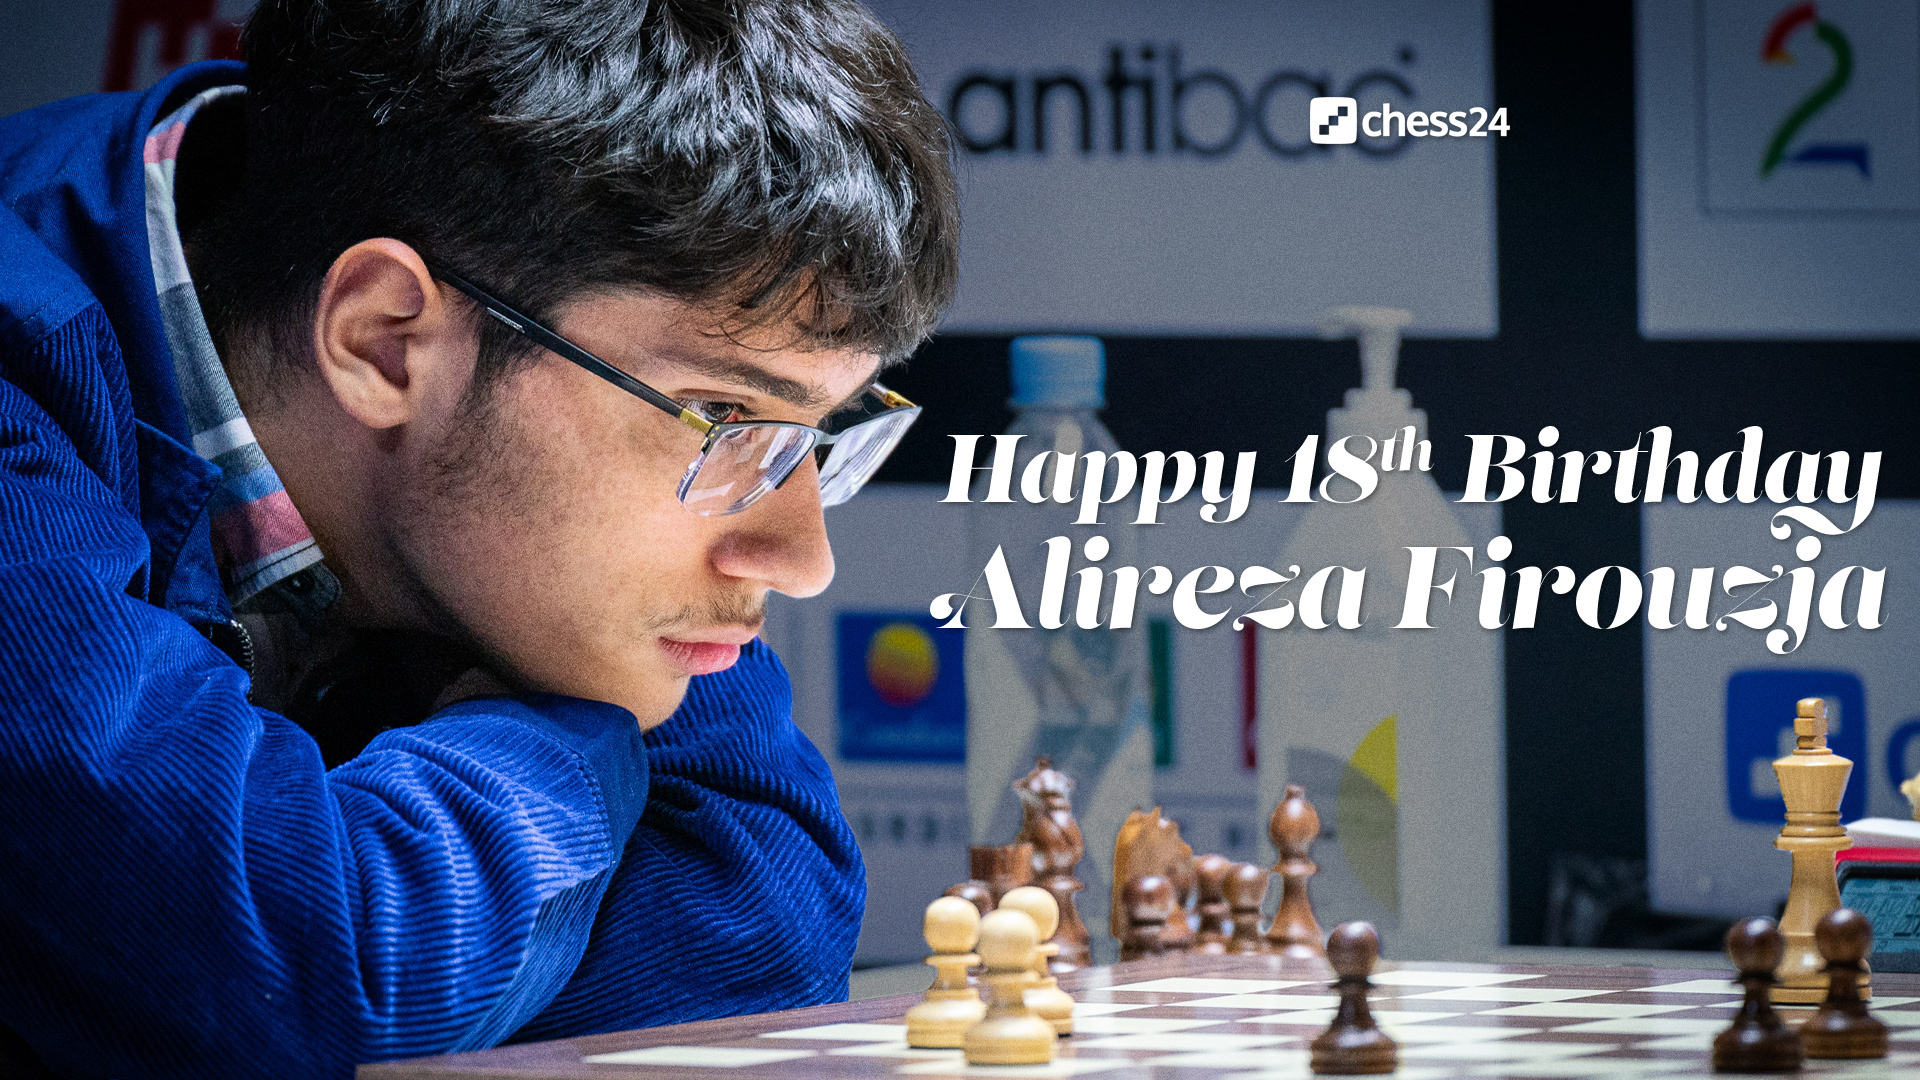 Just want to wish Alireza Firouzja a happy 18th birthday! : r/chess